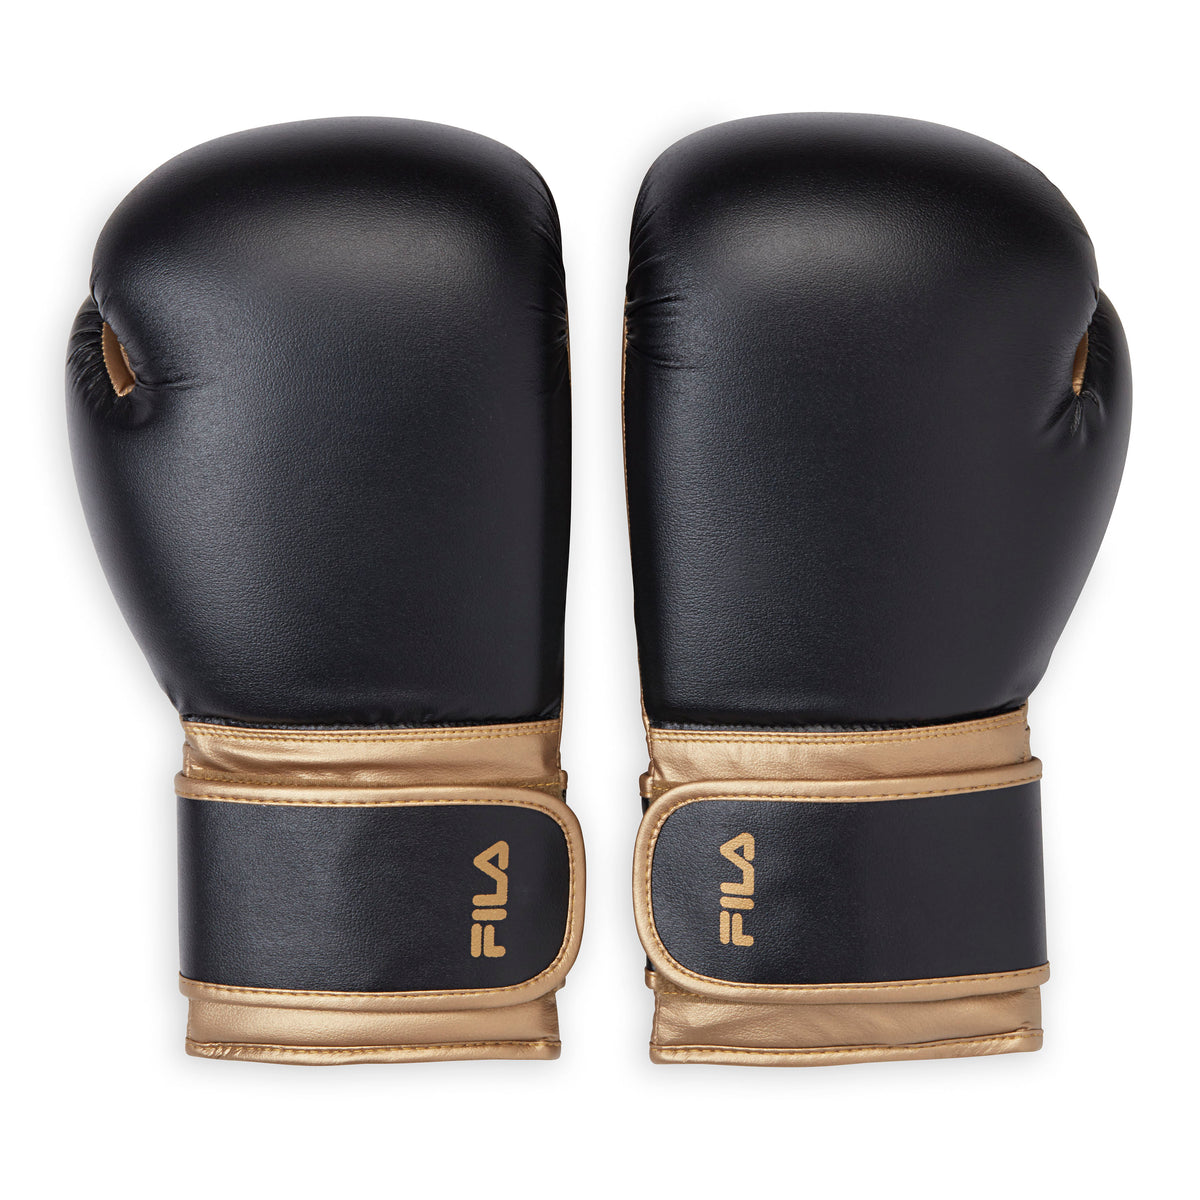 FILA Boxing Gloves (14oz) Black/Gold both gloves back